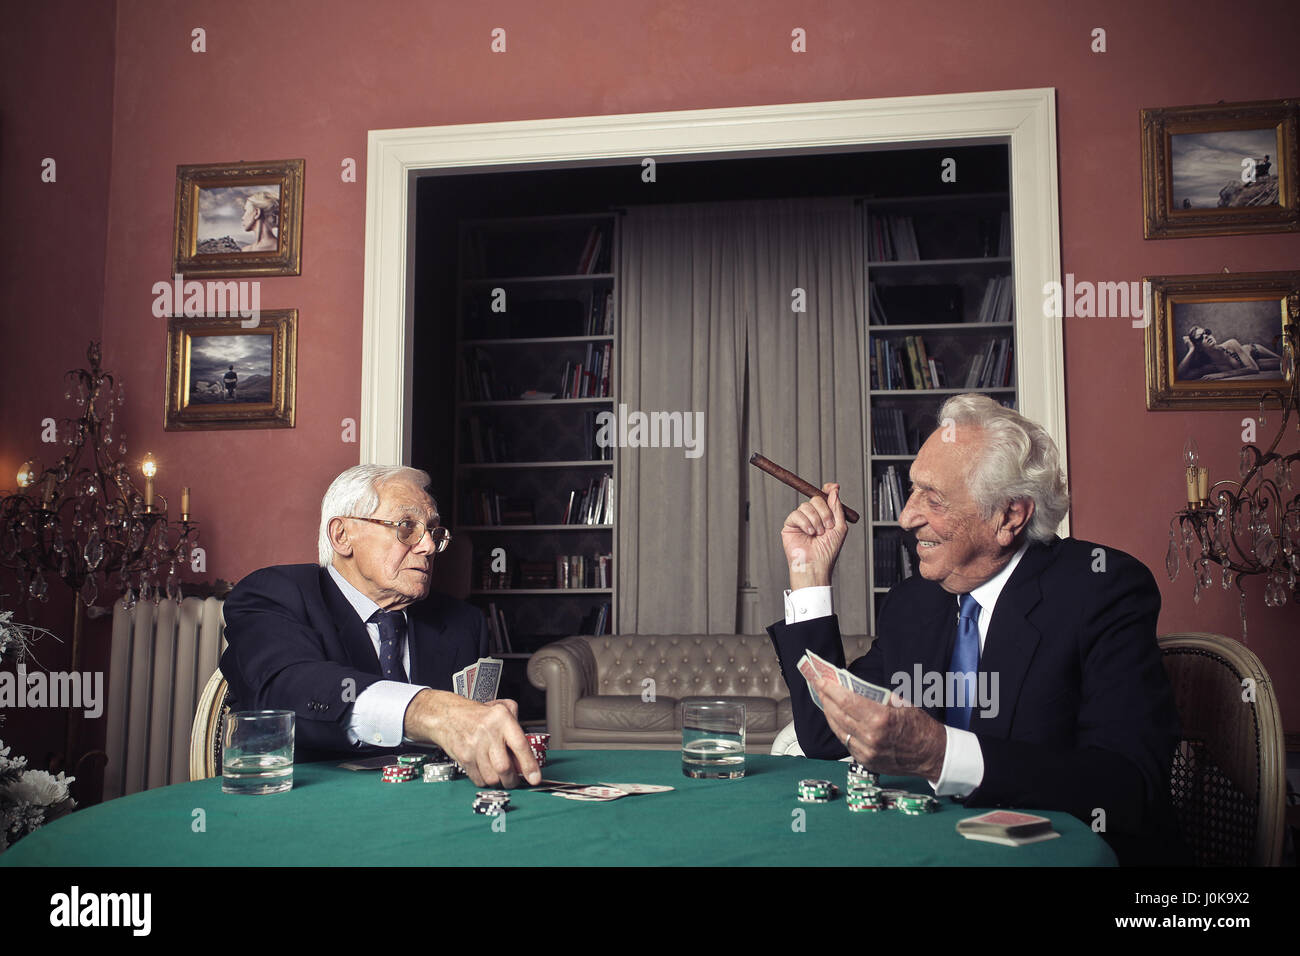 2 Old Men playing poker Banque D'Images